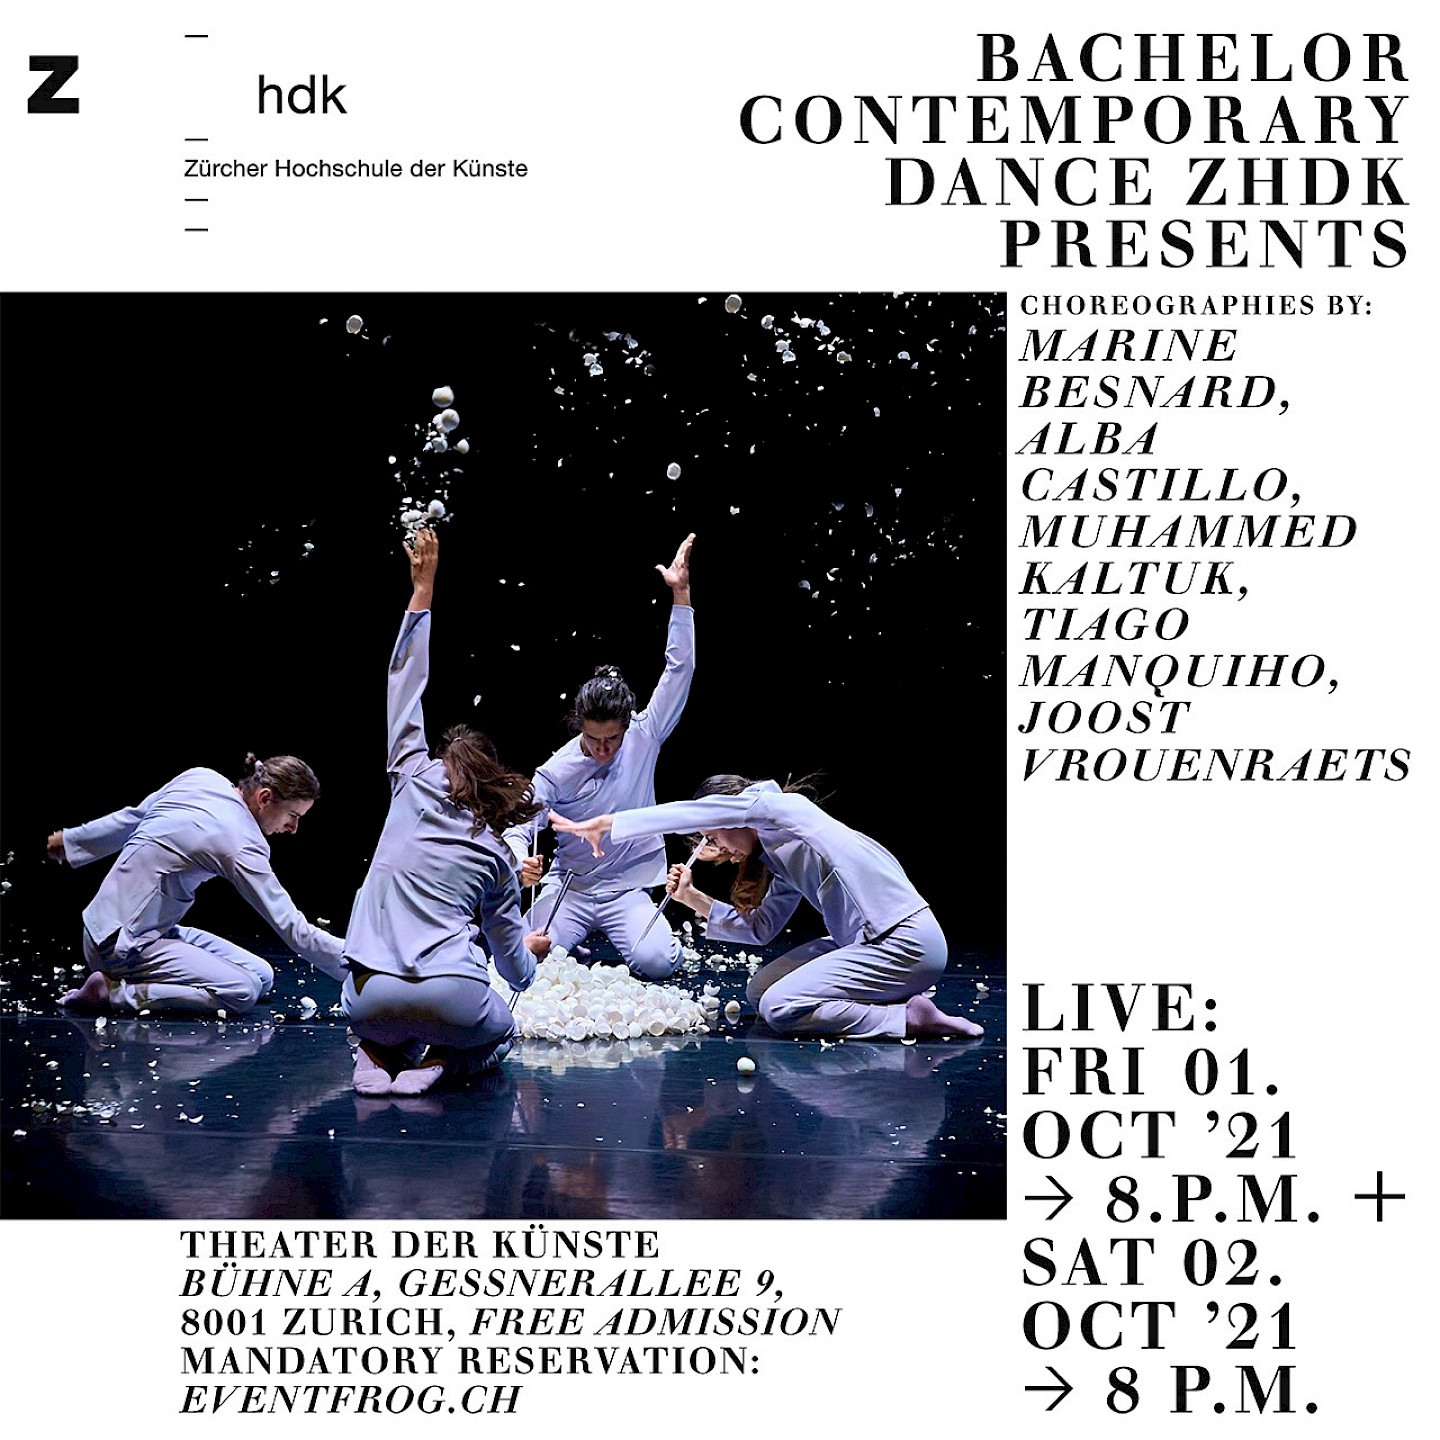 Bachelor Contemporary Dance ZHdK presents: